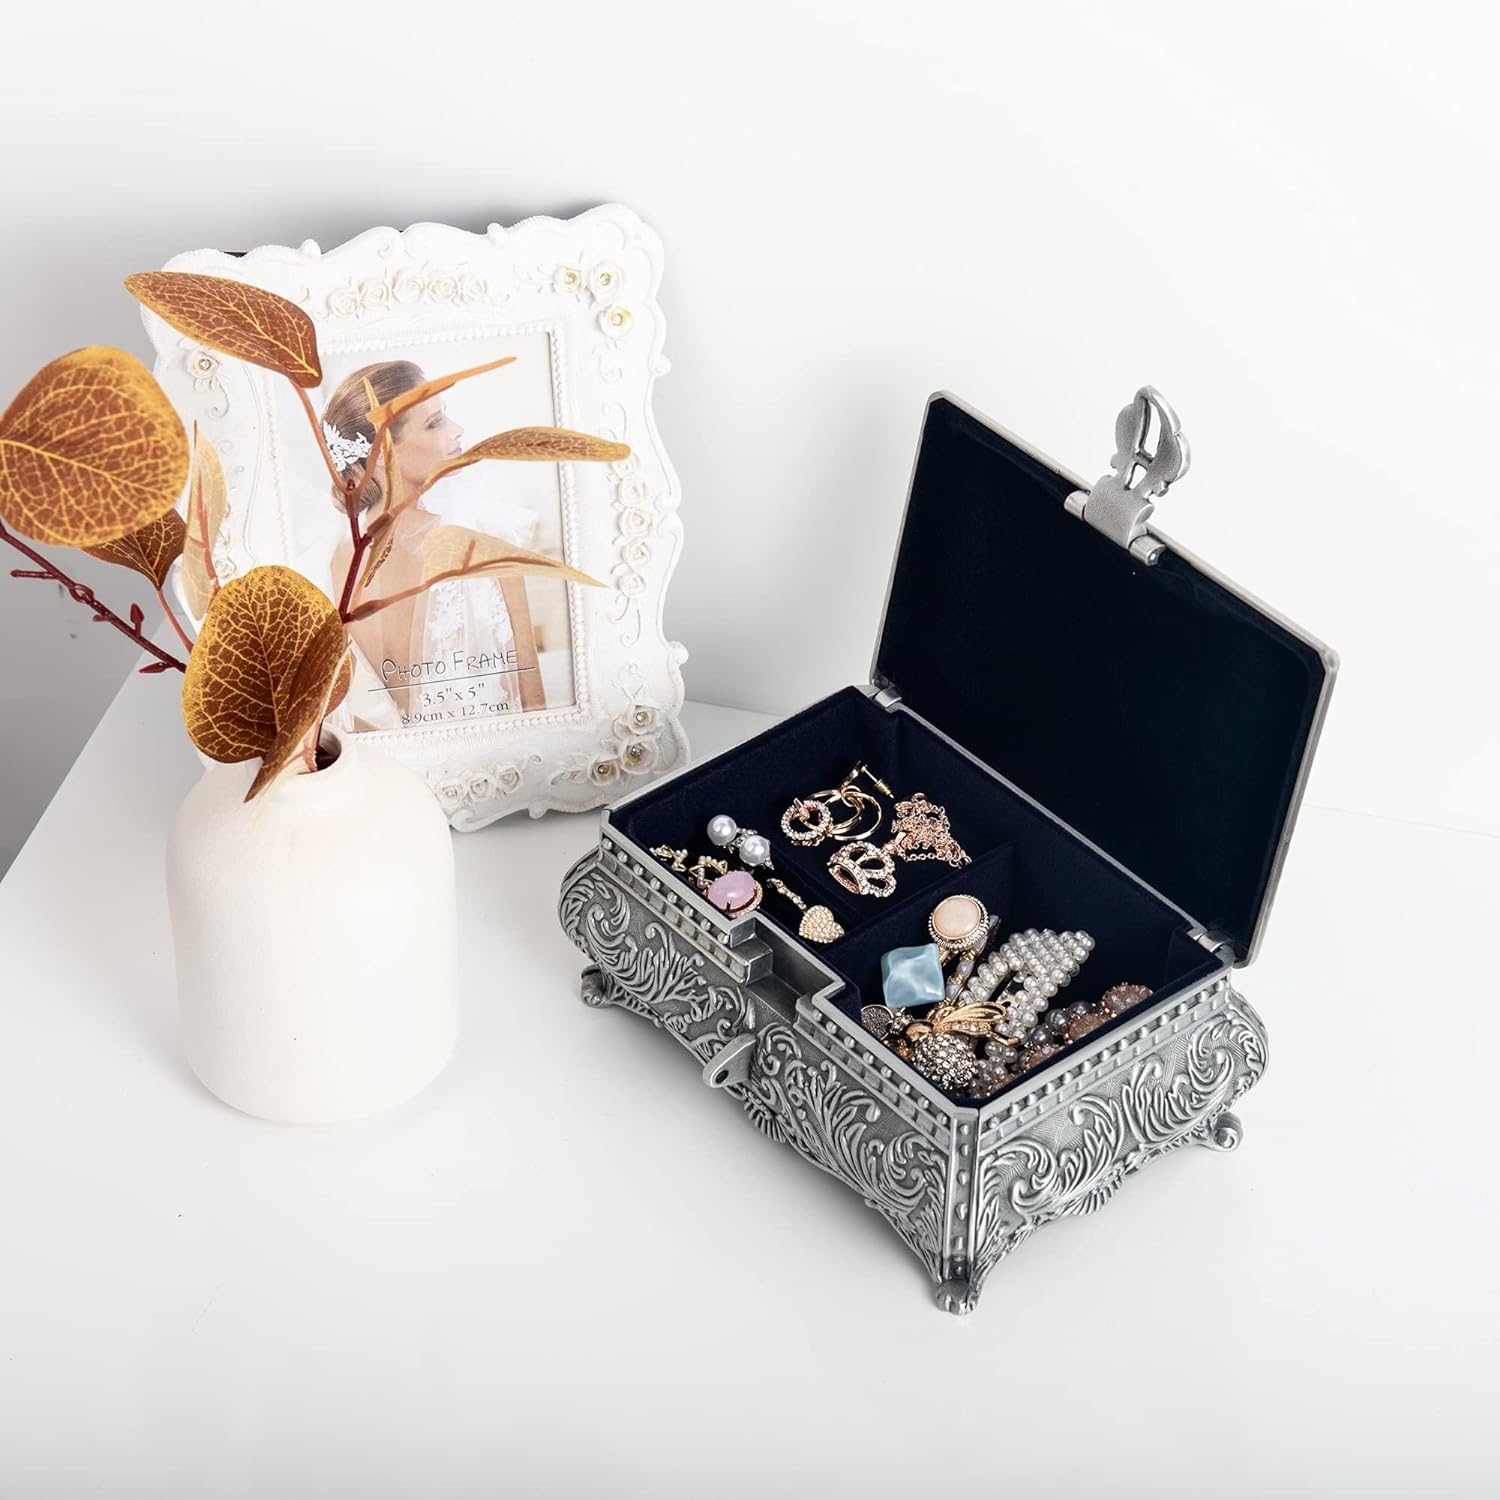 Feyarl Vintage Jewelry Trinket Box Earring Ring Treasure Chest Case Necklace Organizer Storage Keepsake Box for Wedding Birthday Gift Home Deco(6.7 x 4.7 x 3.5 inch)